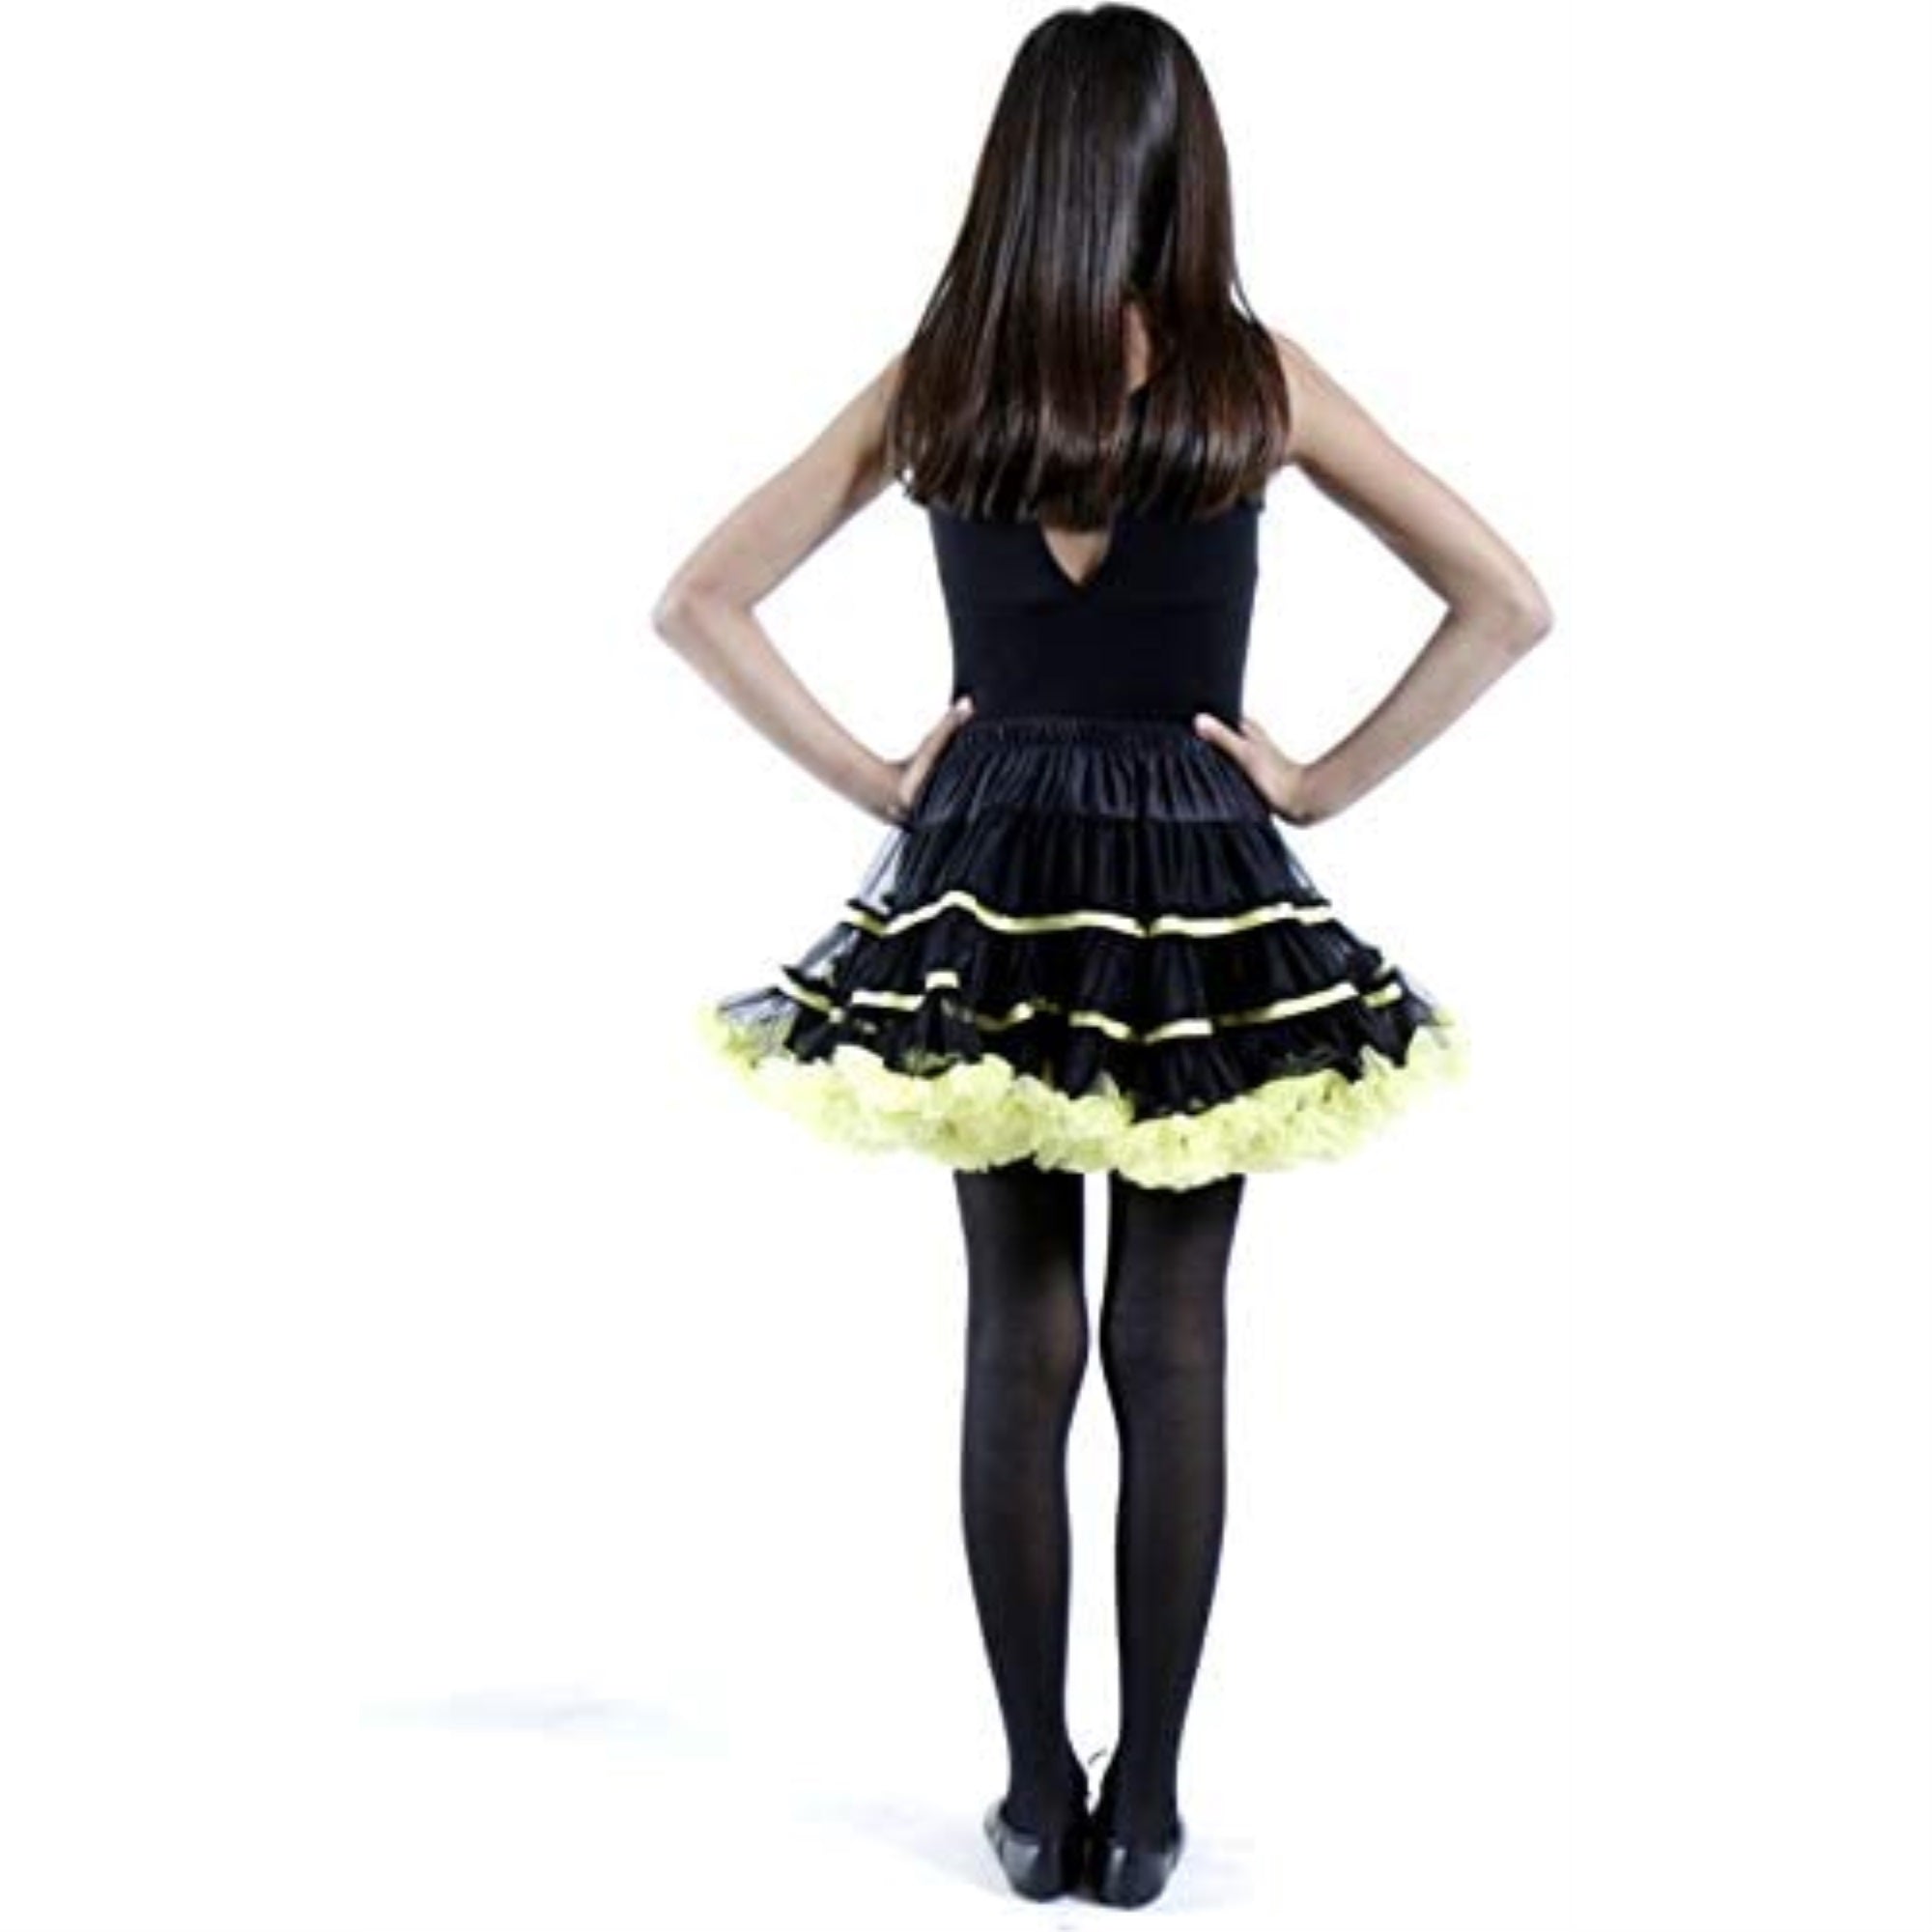 Adult Tulle Costume Petticoat - Black/Yellow